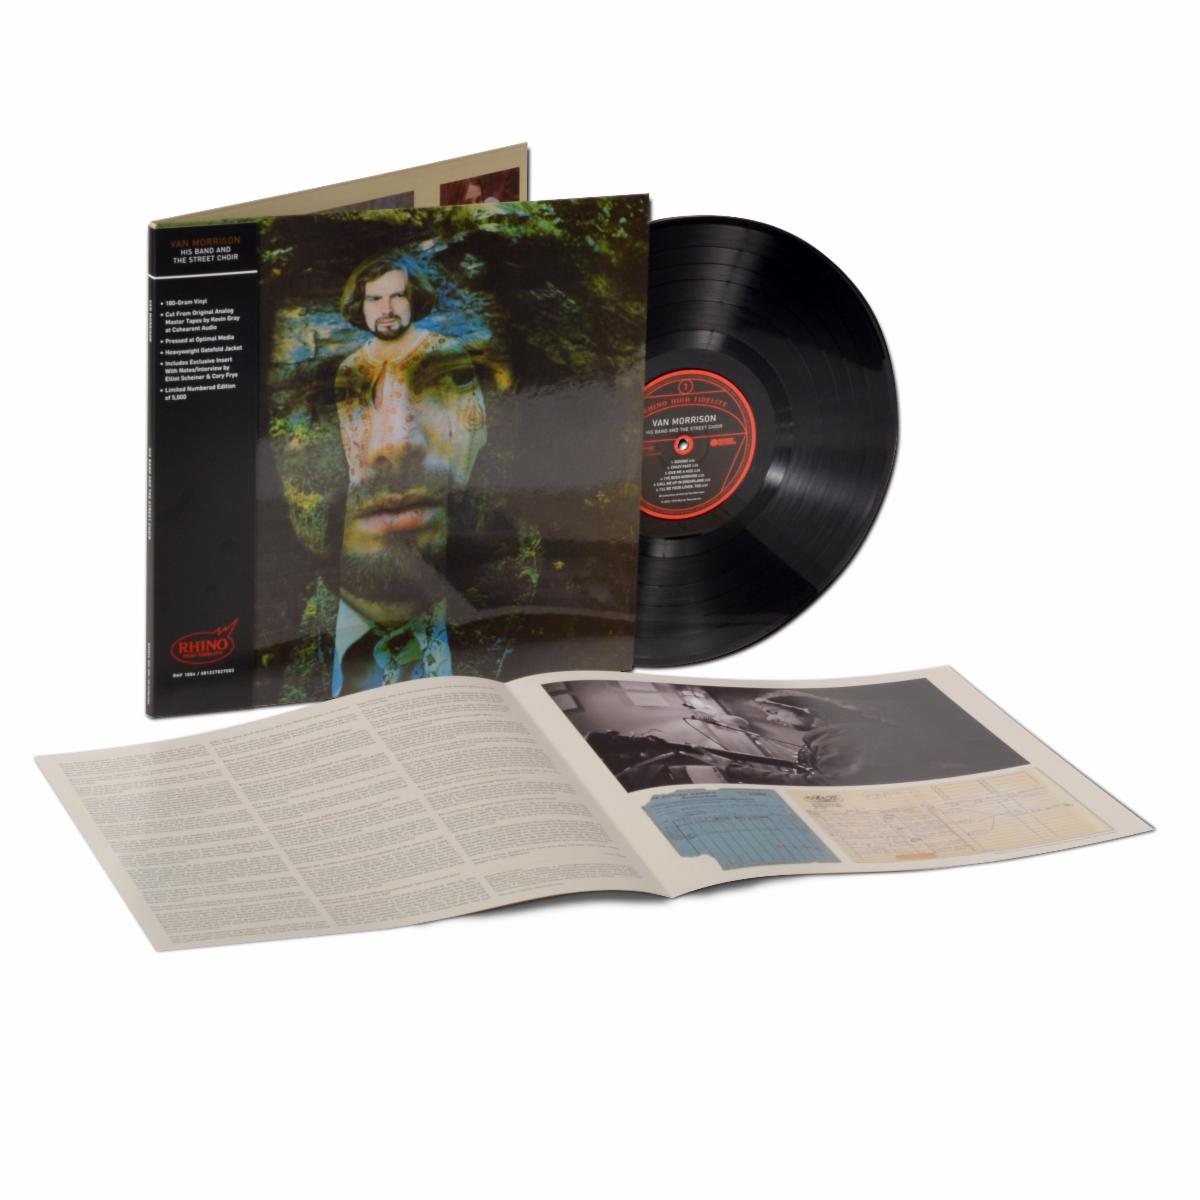 Rhino High Fidelity Reissues The Still Essential Van Morrison's